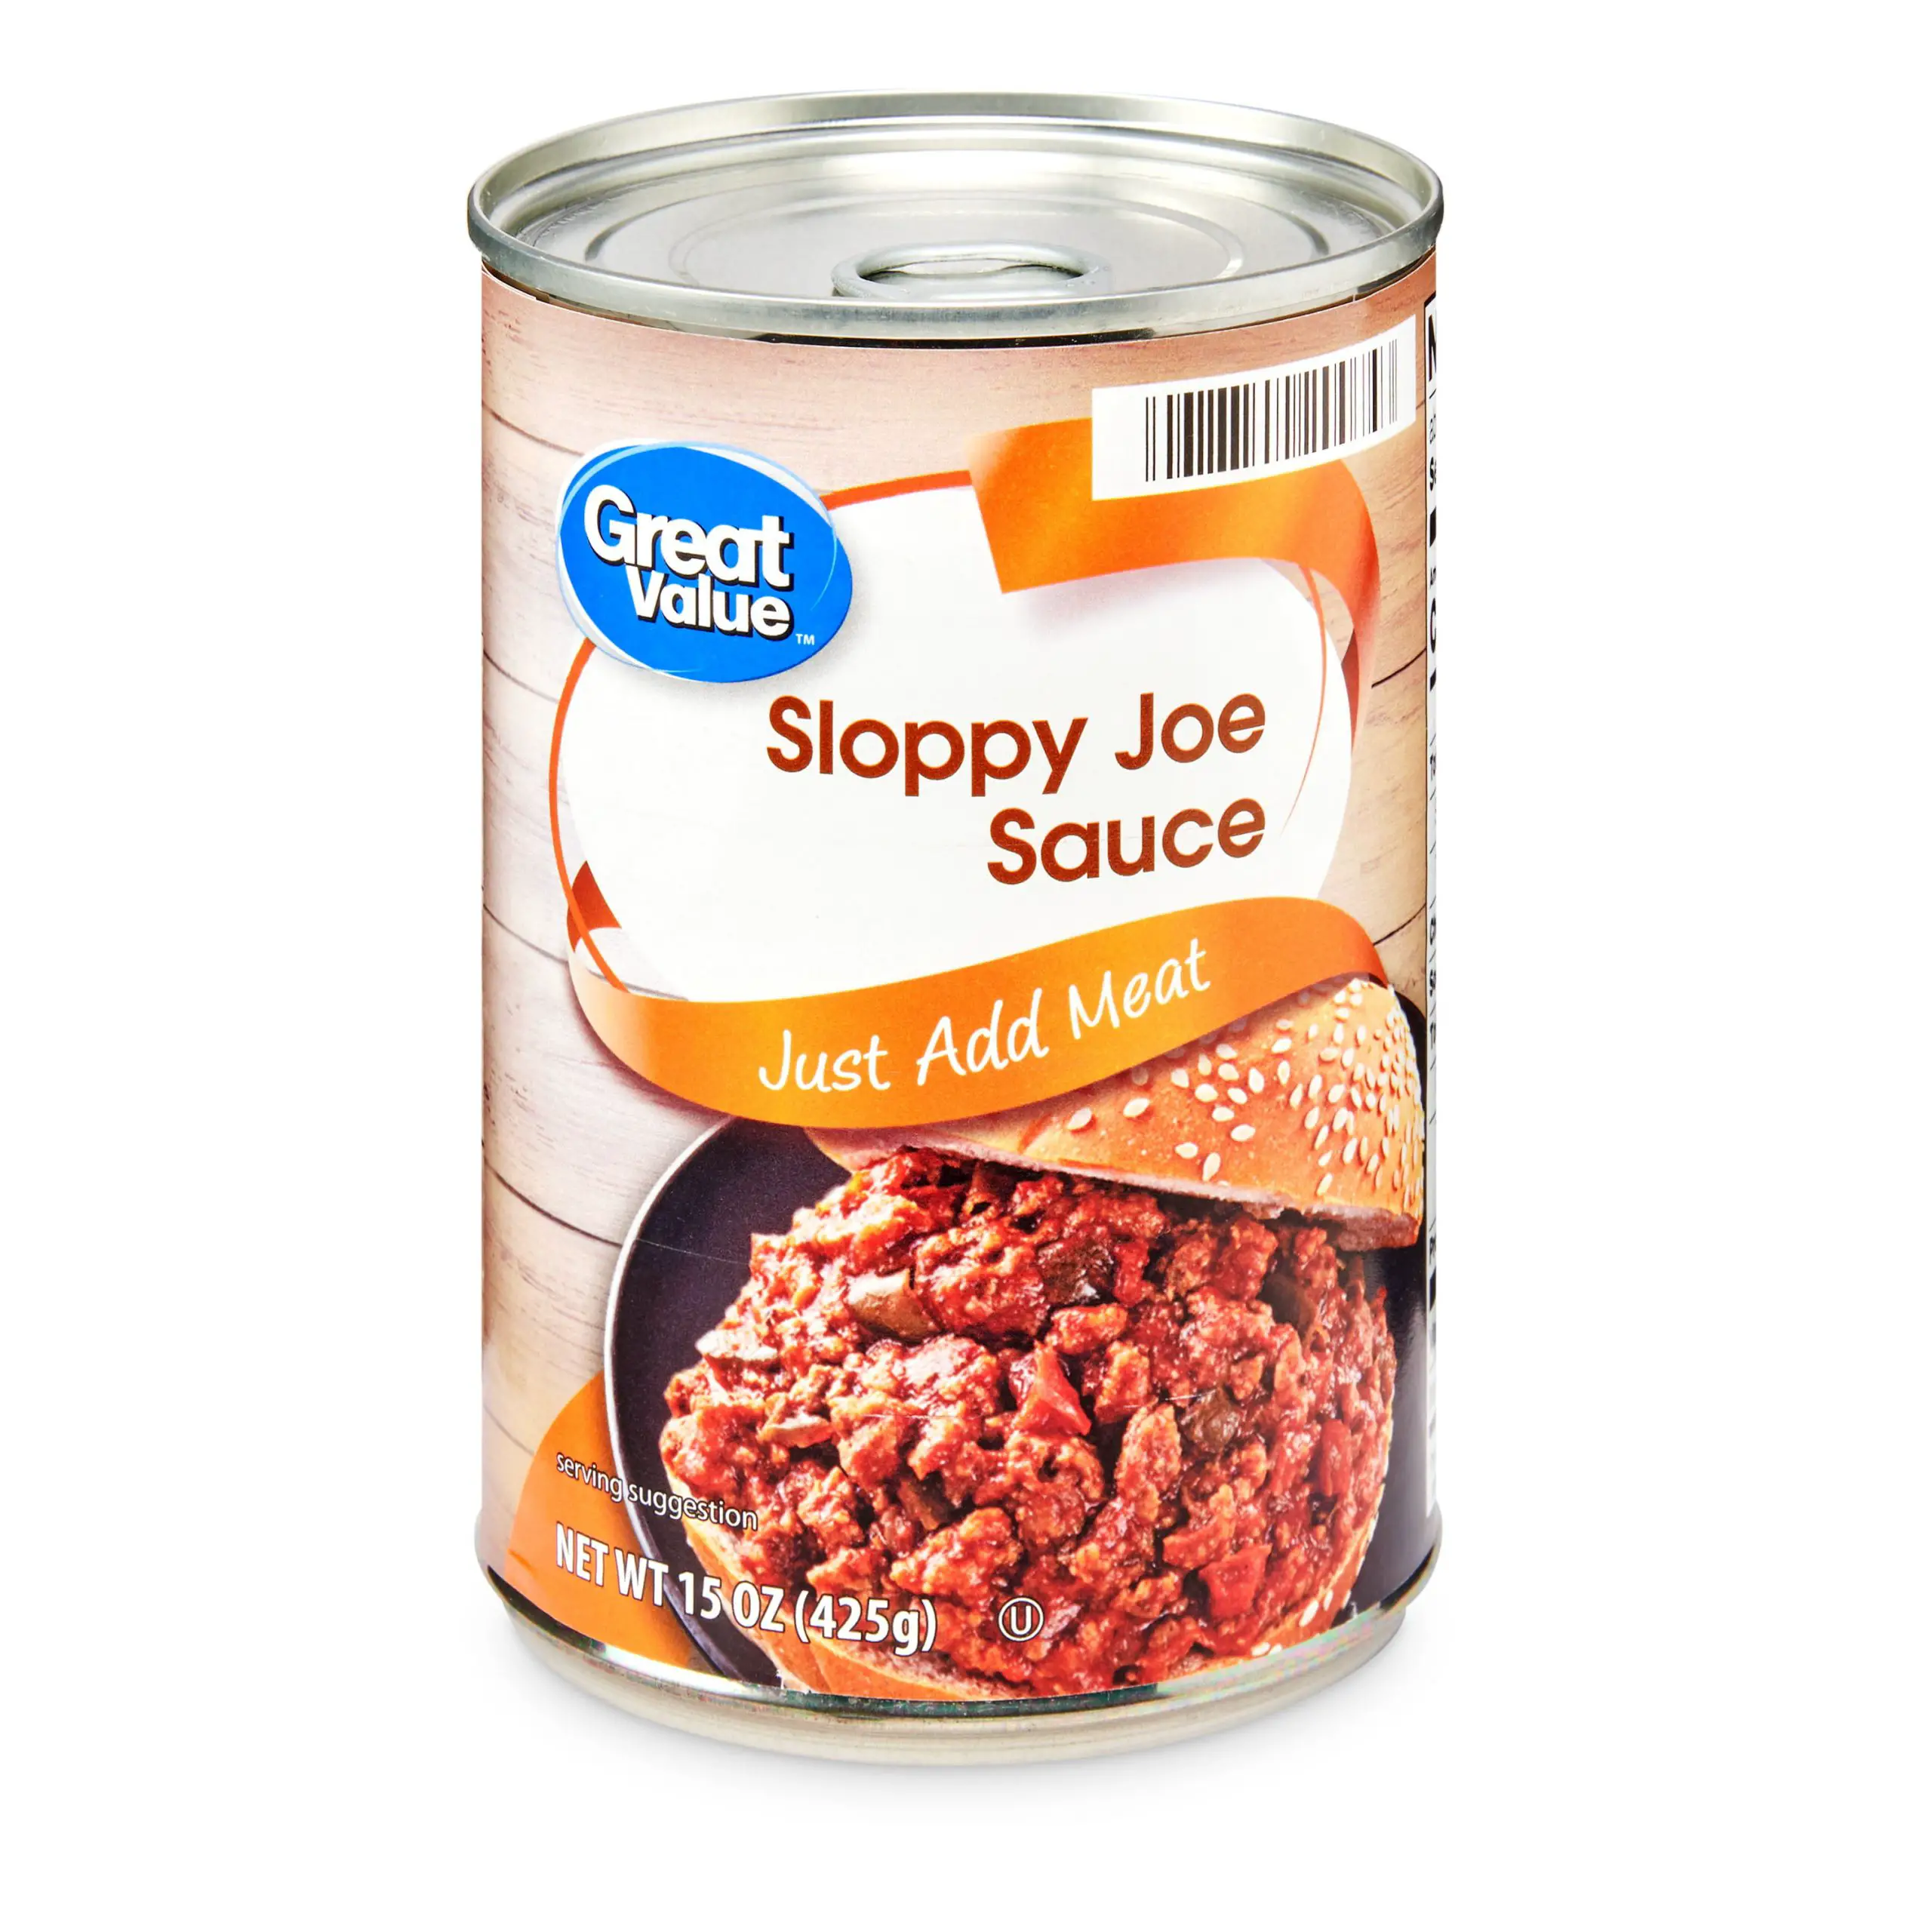 Great Value Sloppy Joe Sauce, 15 oz